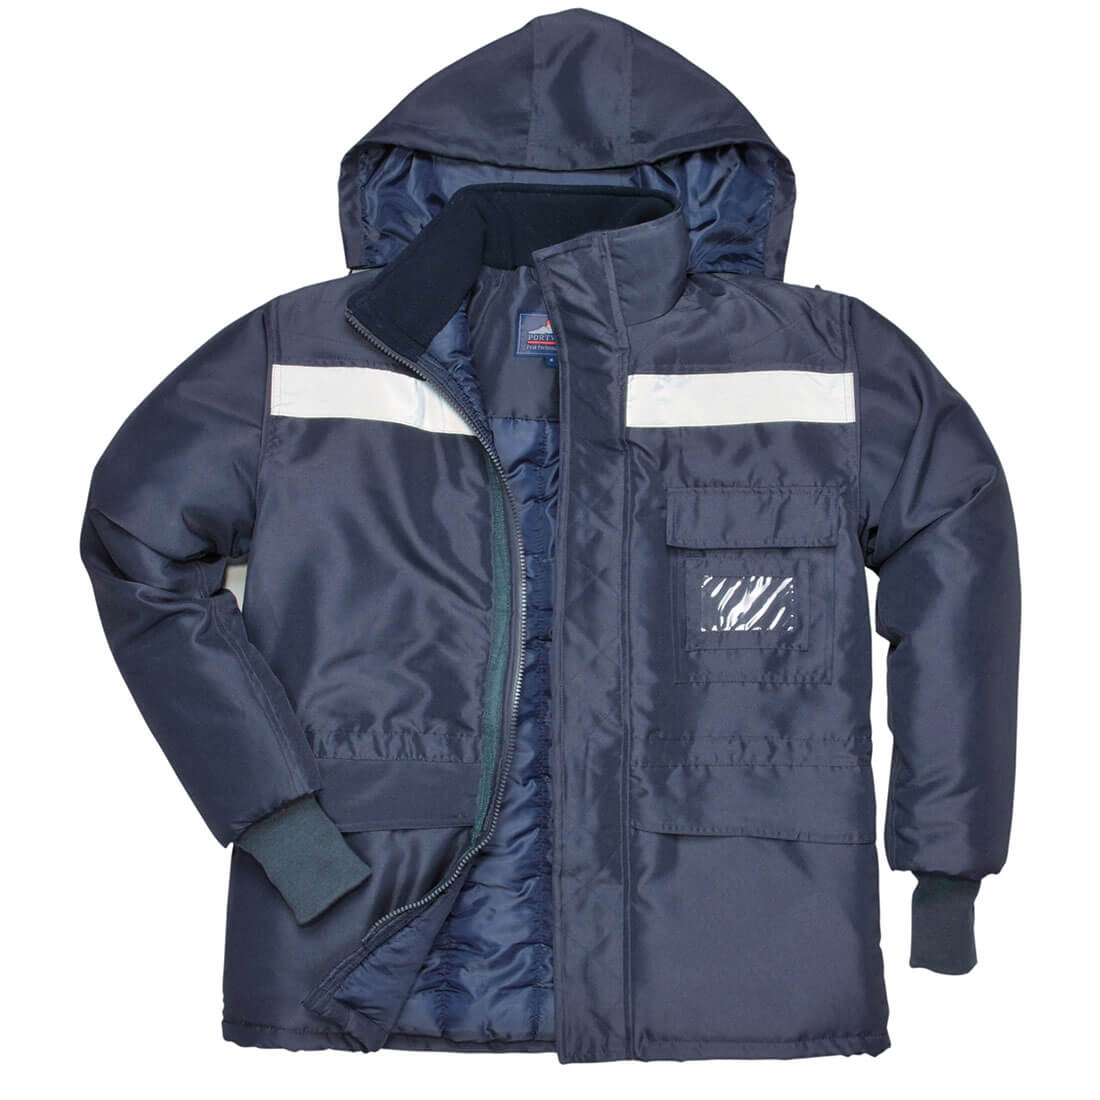 ColdStore Jacket - Safetywear